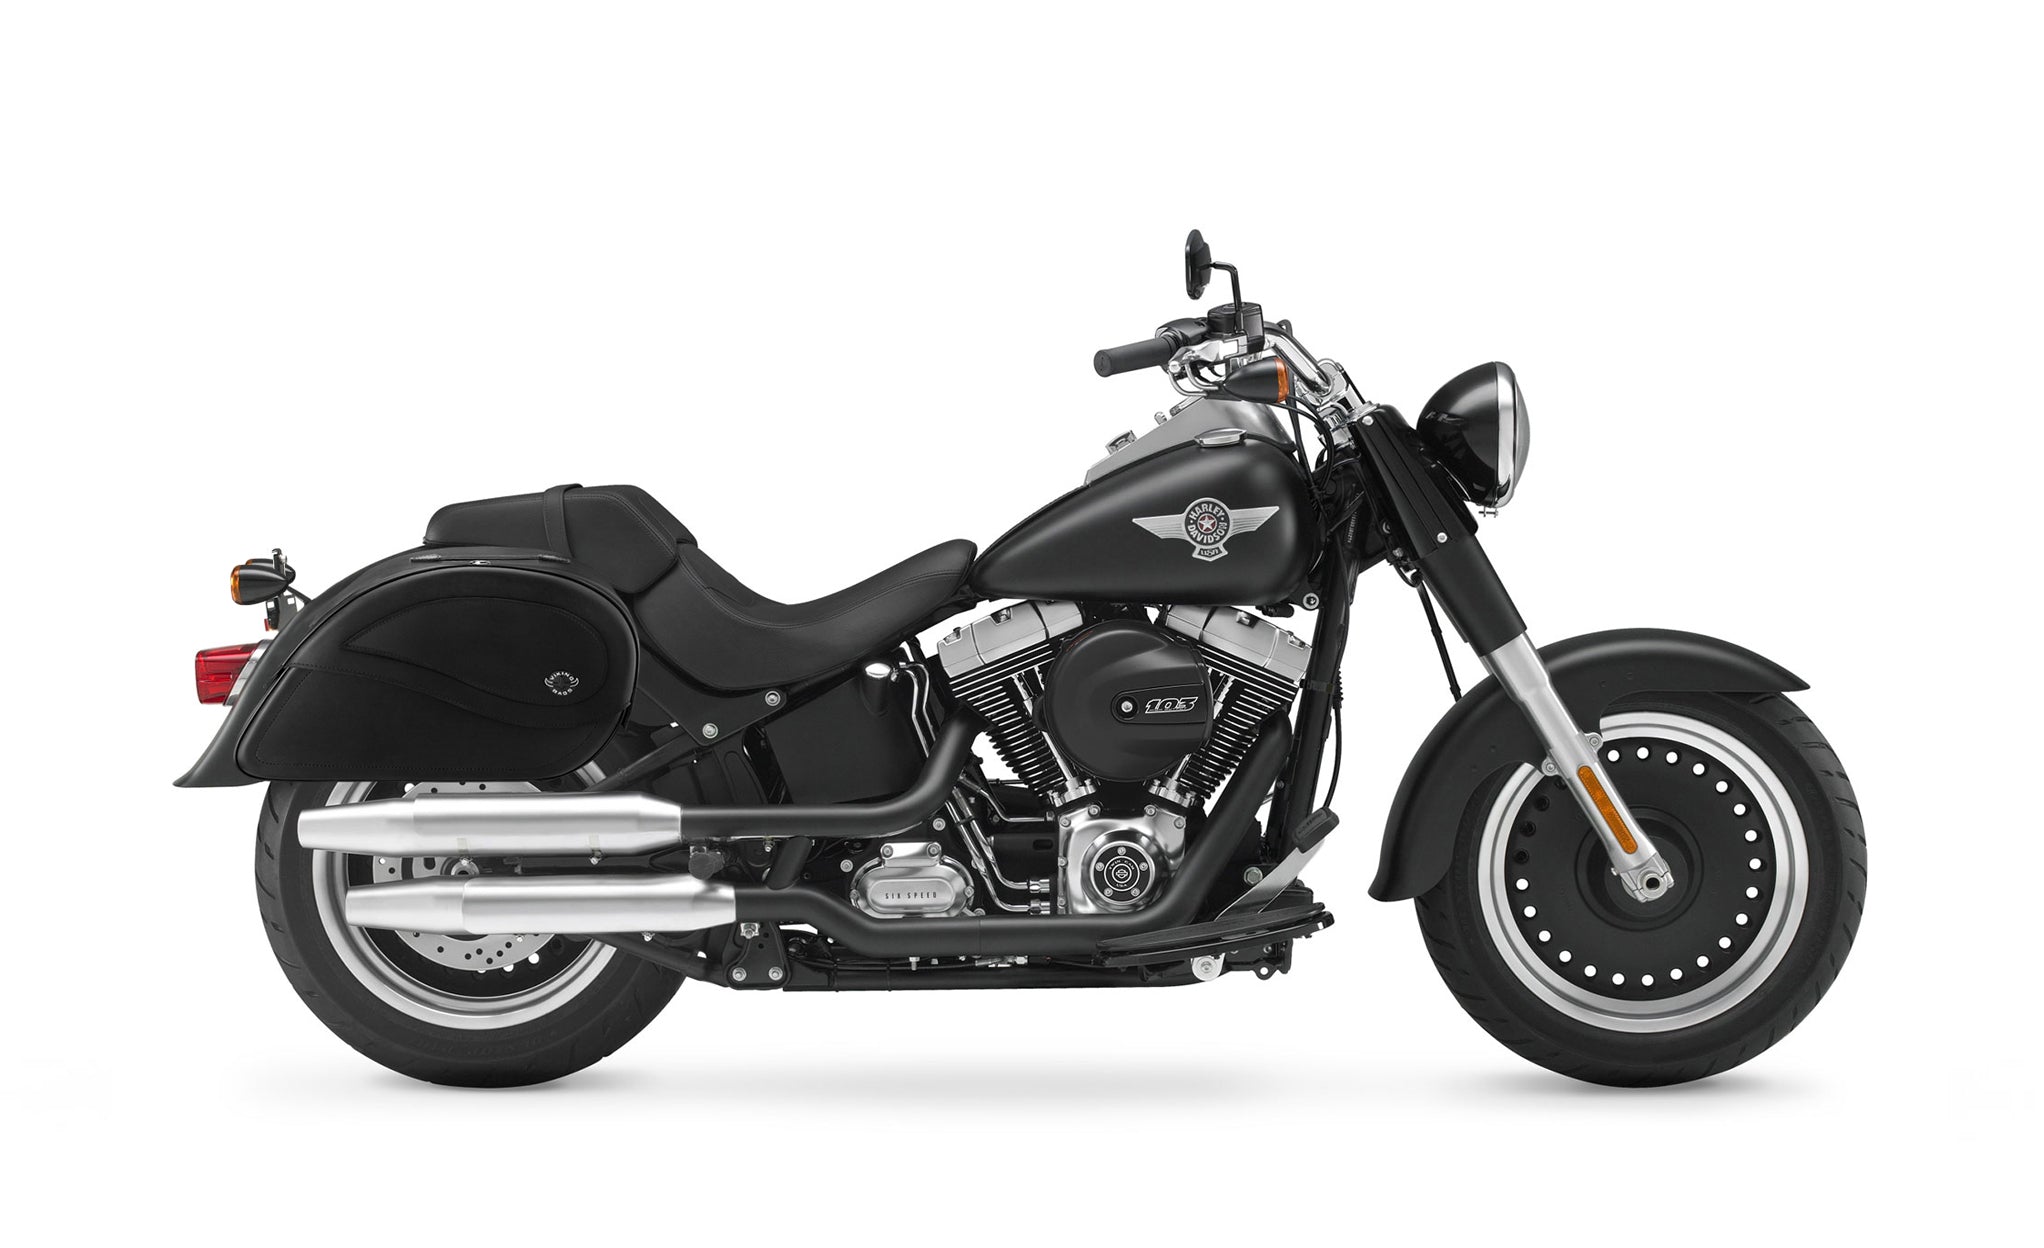 Viking Ultimate Large Leather Motorcycle Saddlebags For Harley Davidson Softail Fat Boy Lo Flstfb on Bike Photo @expand